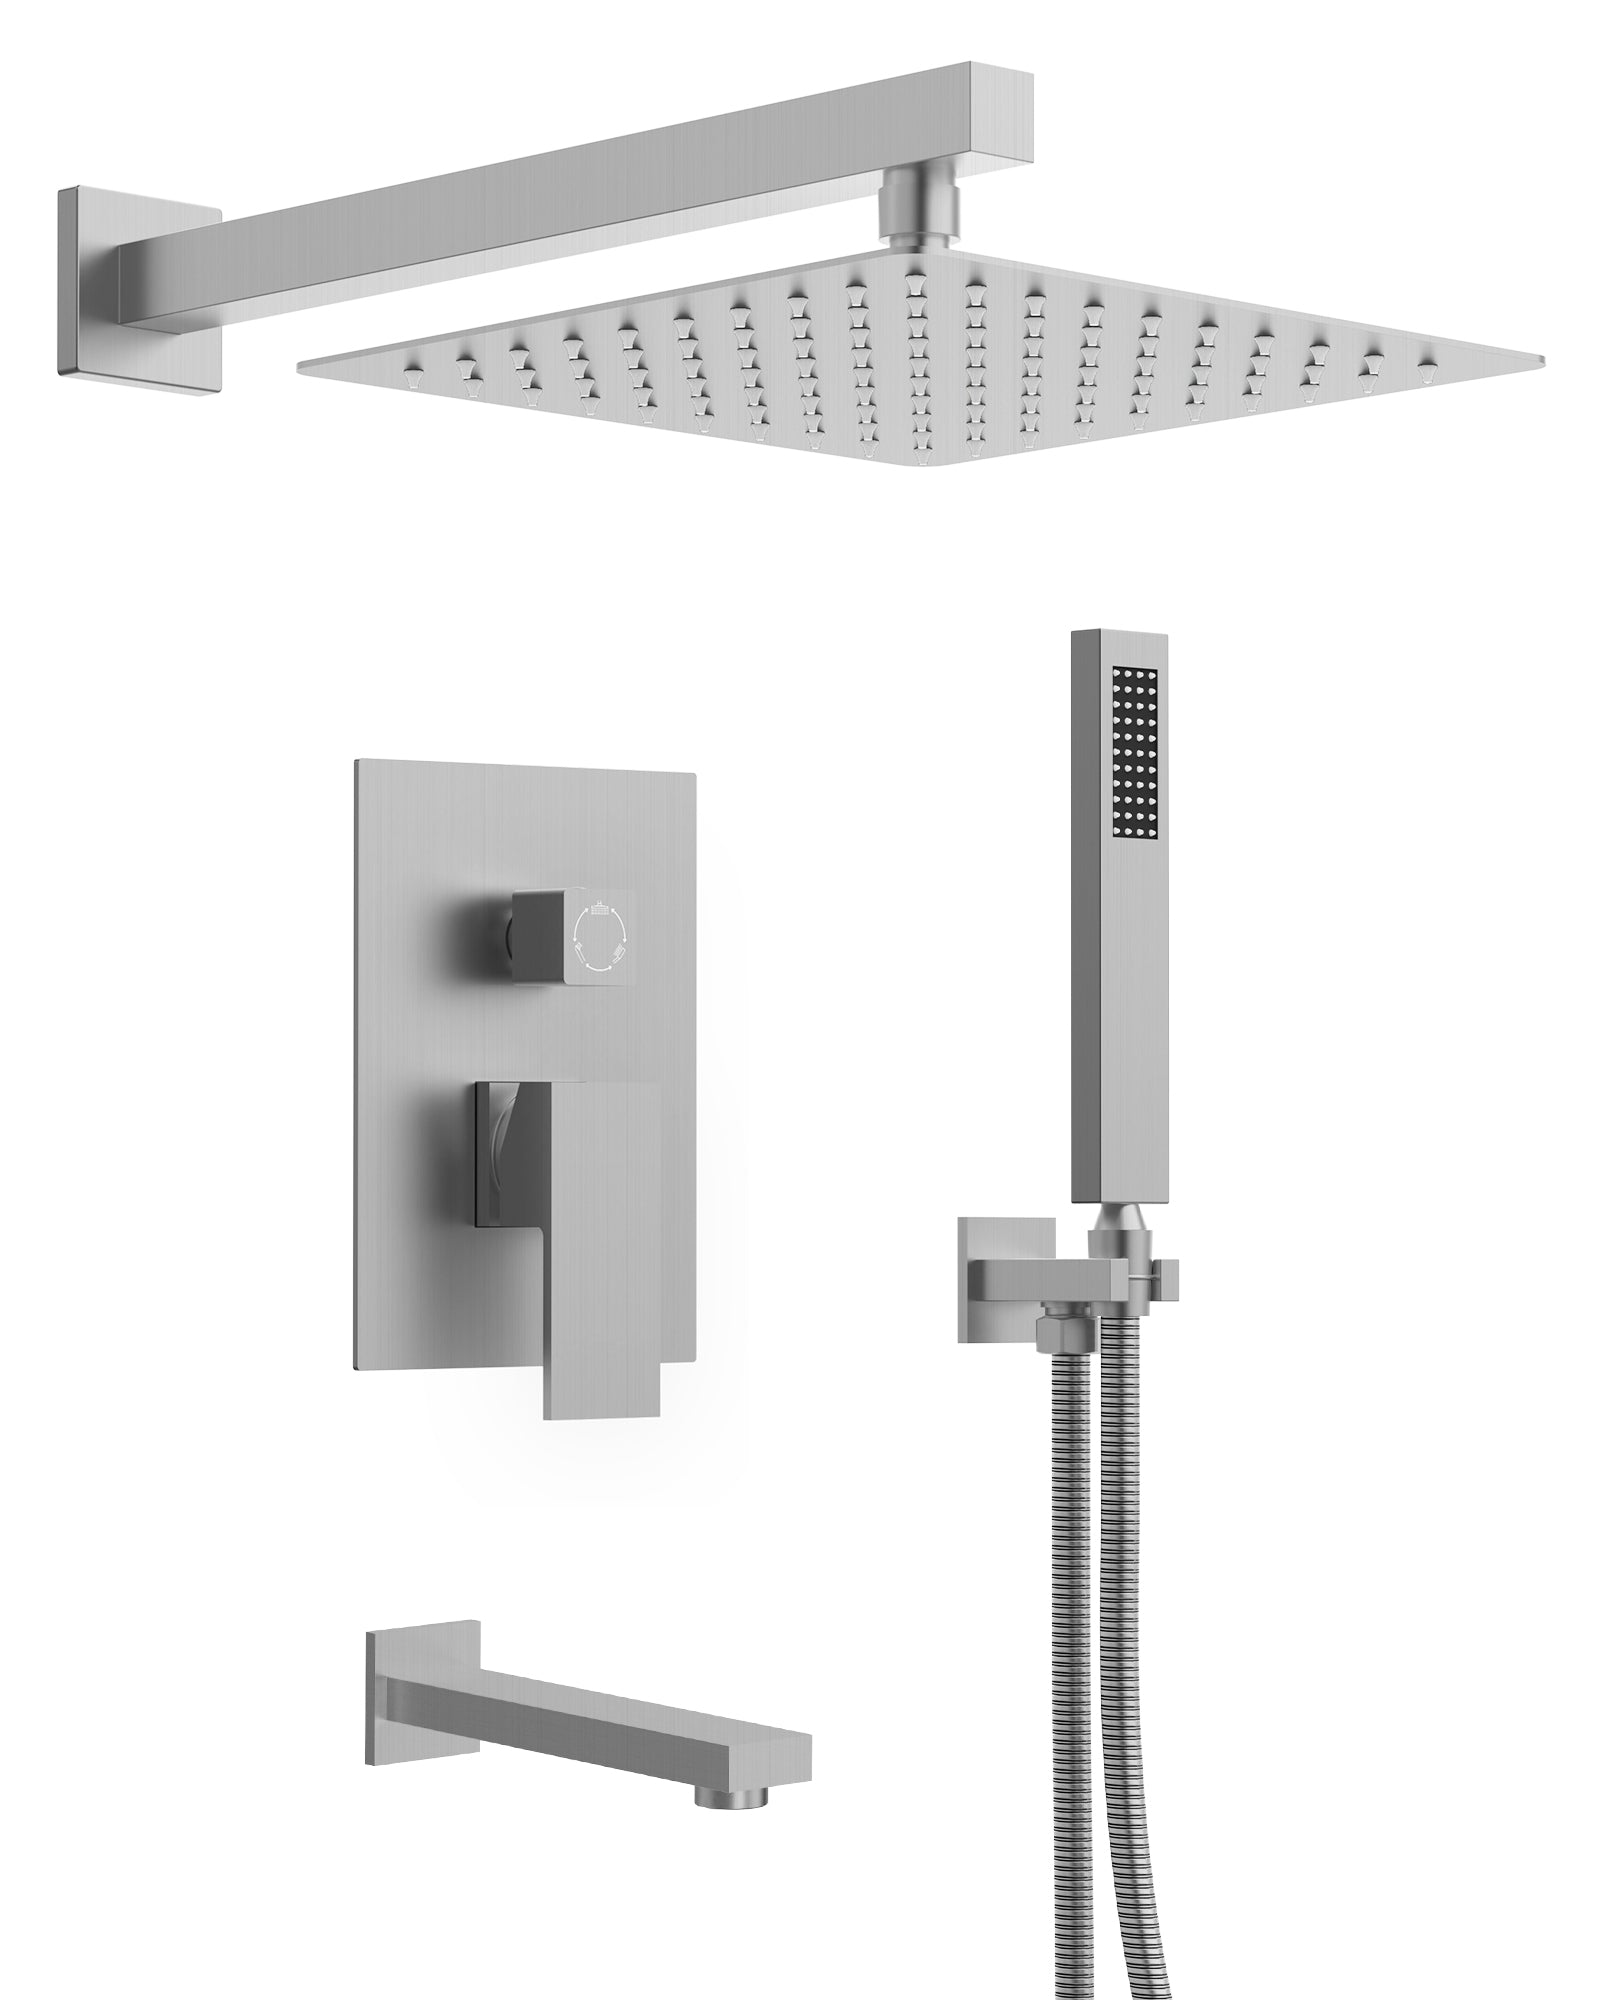 EVERSTEIN Luxury Chrome Shower Faucet Combo - 10" Rain Head, Bathtub Spout, & Handheld Sprayer, Wall Mount with Balance Valve